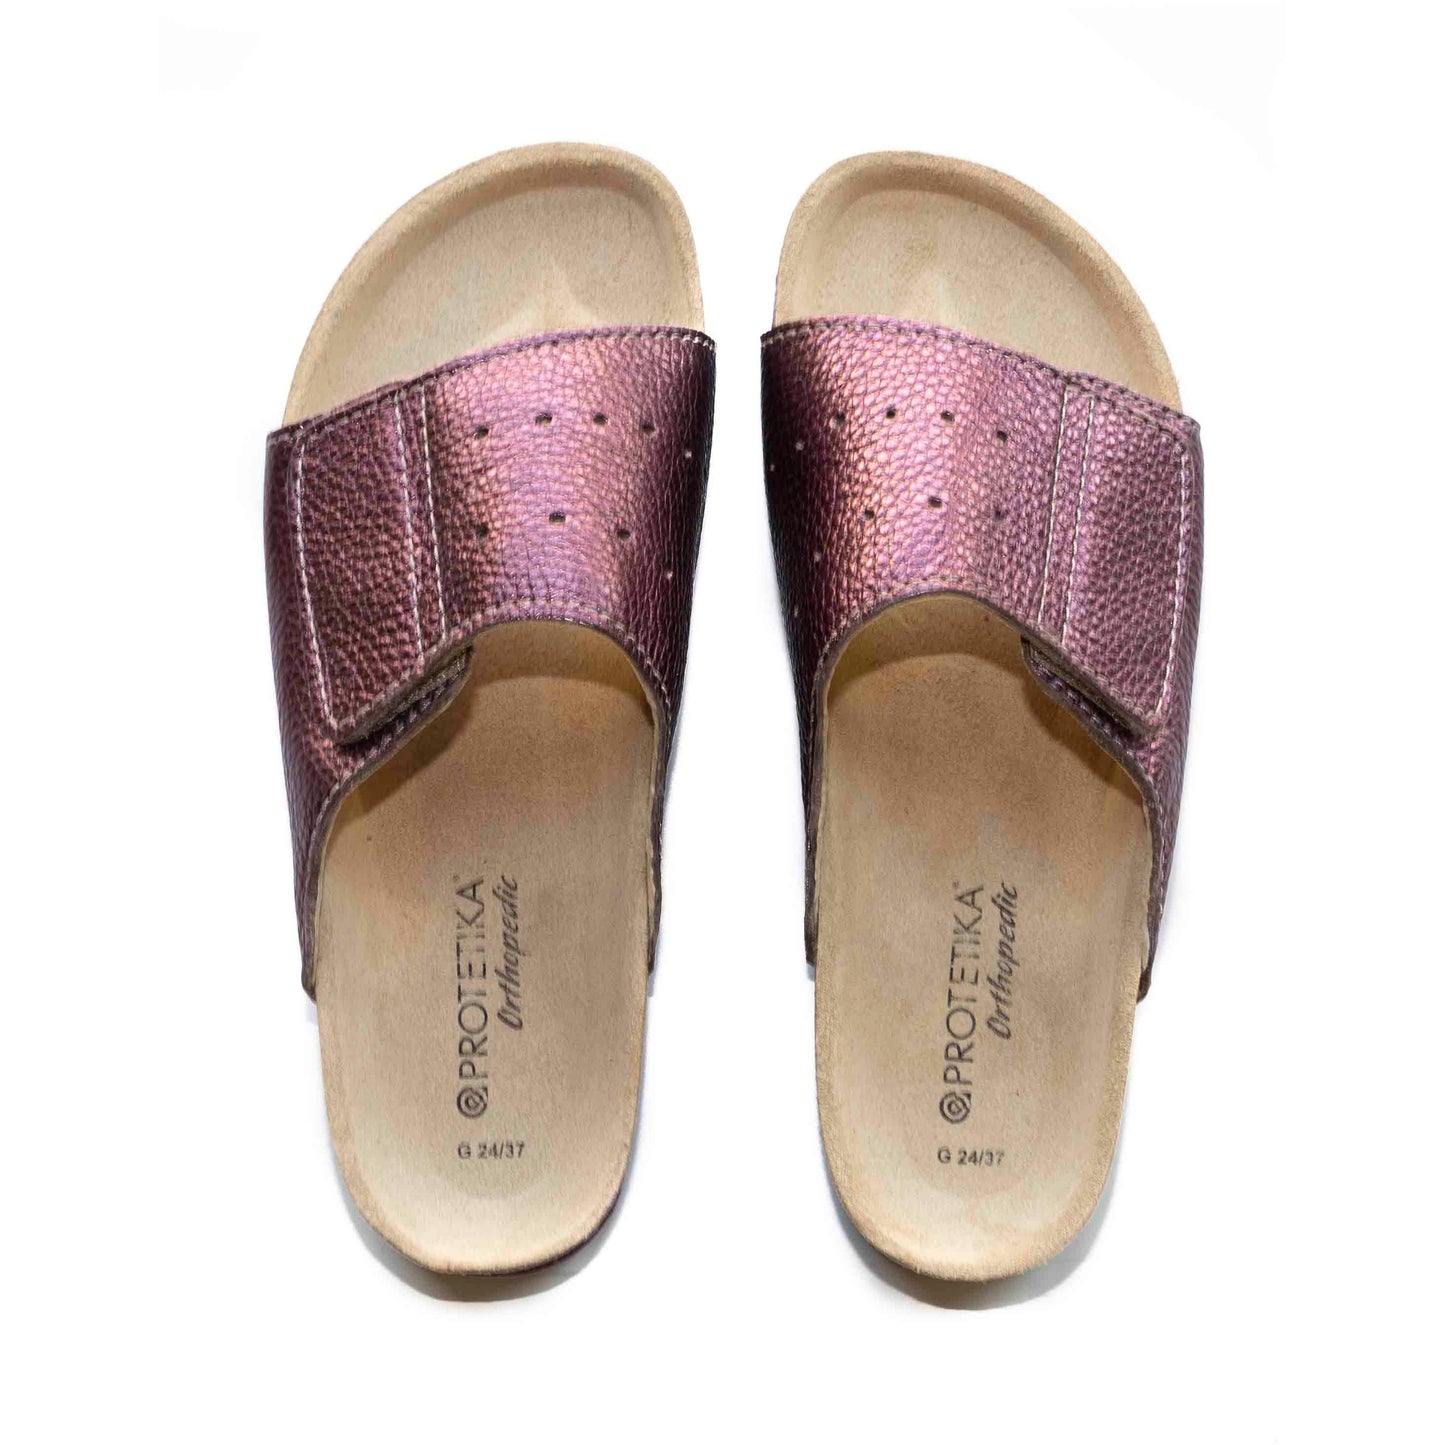 T122 RADANA: metallic fuchsia ladies orthotic sandals